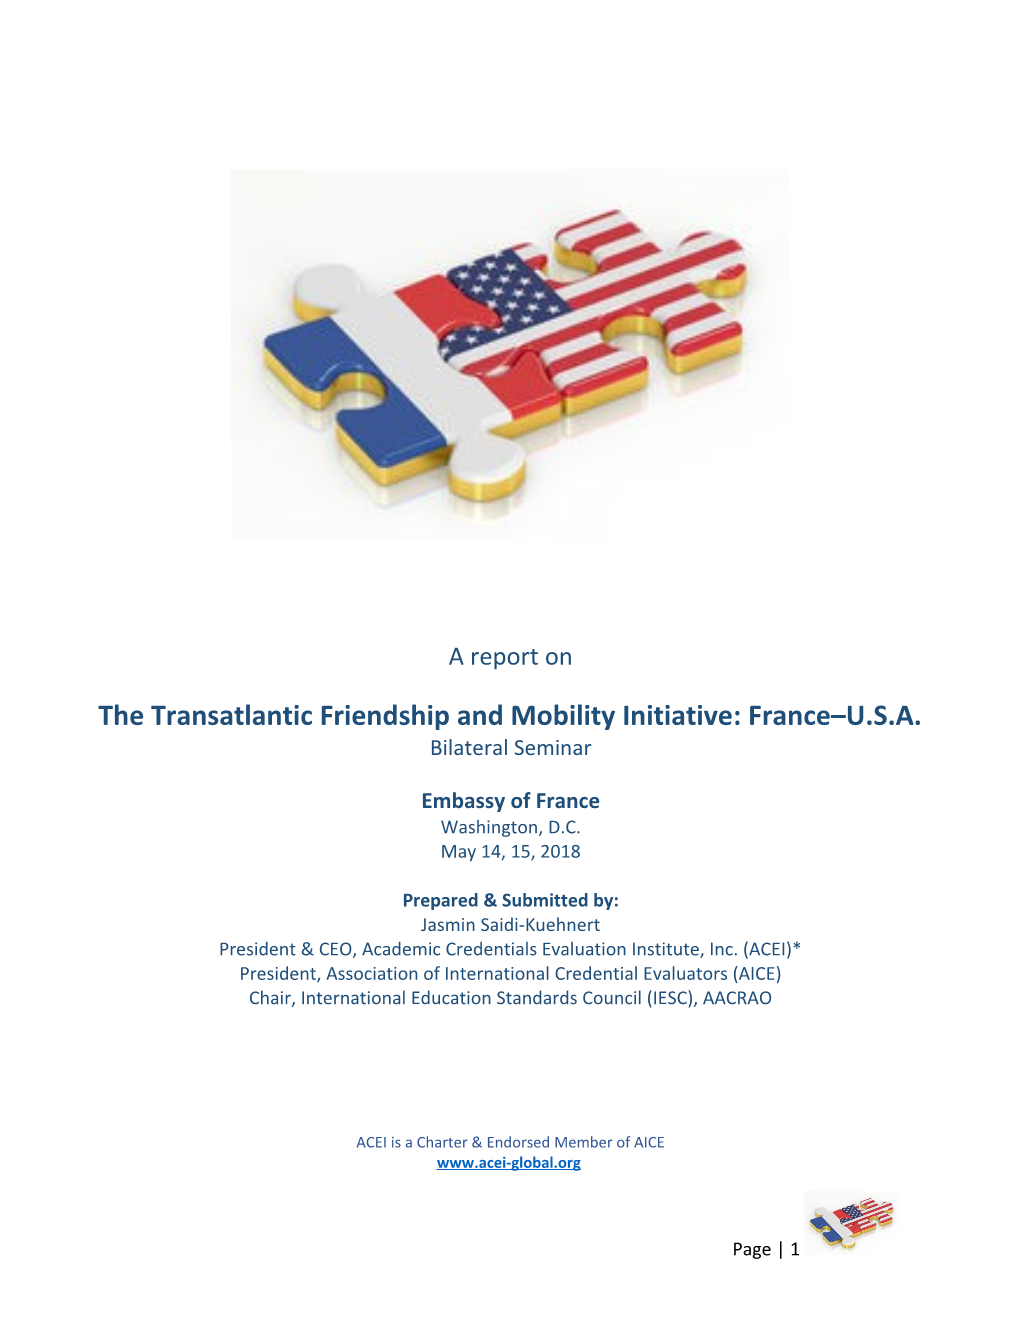 The Transatlantic Friendship and Mobility Initiative: France U.S.A